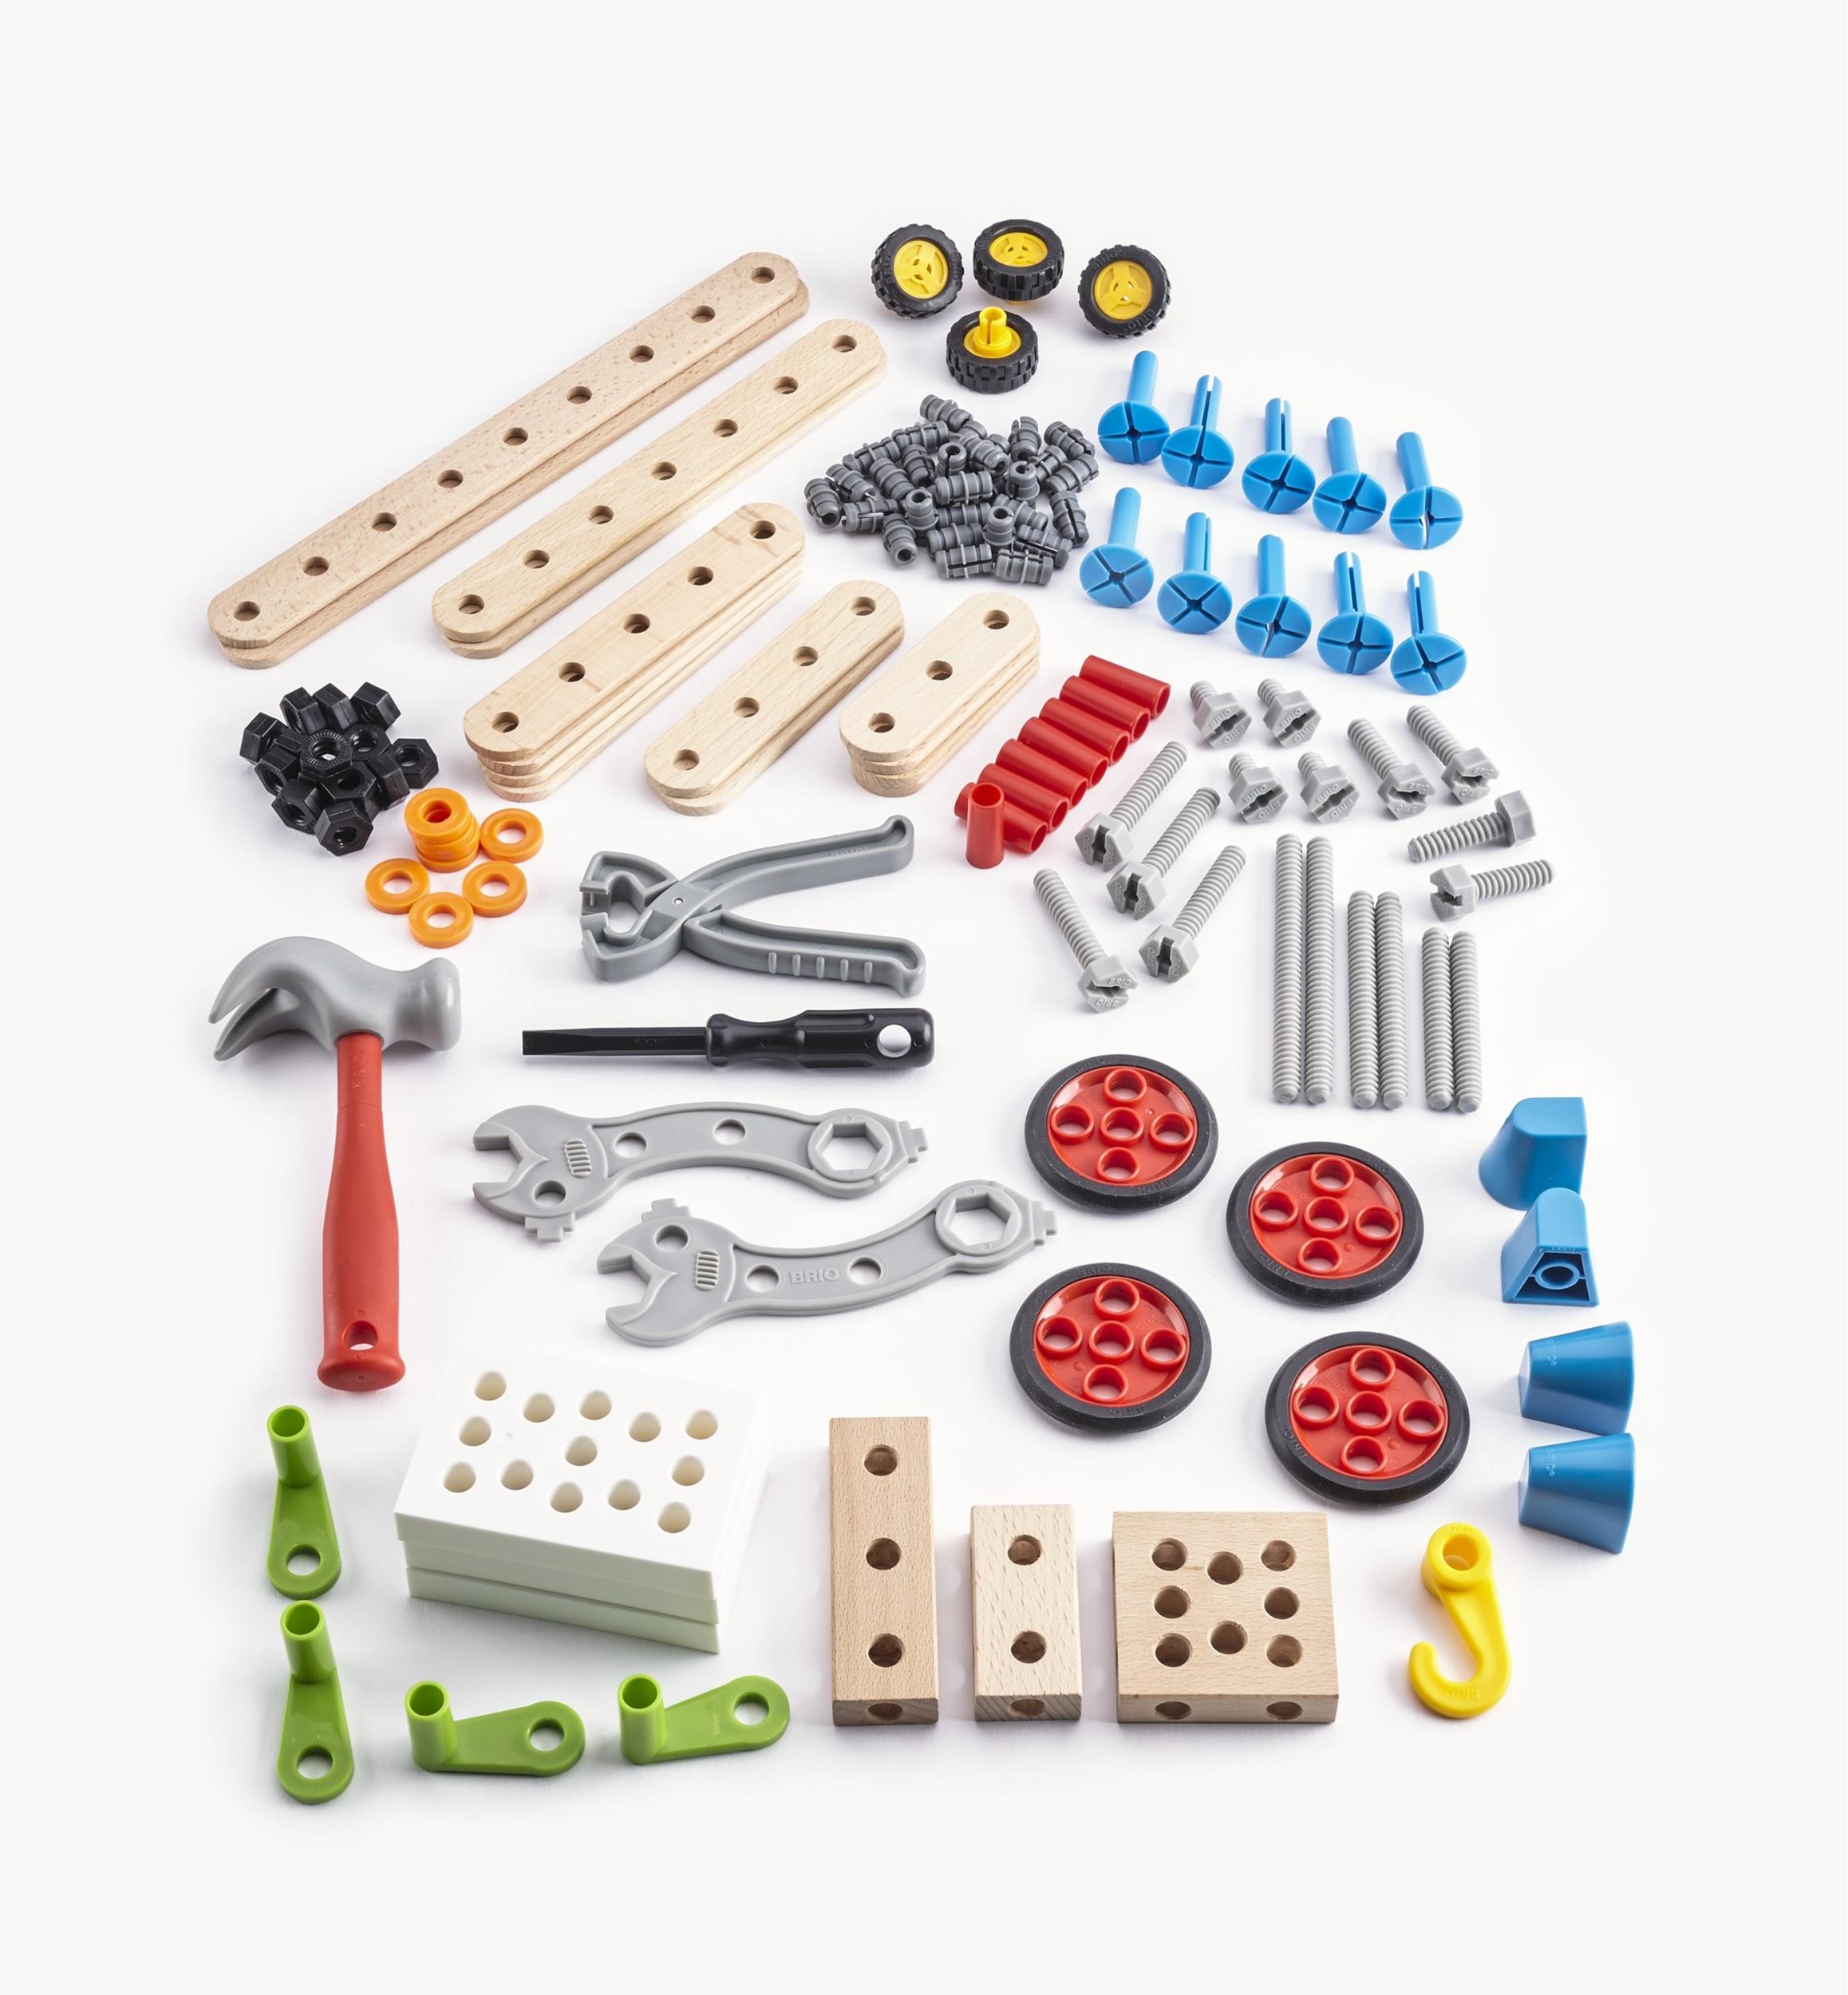 brio construction kit